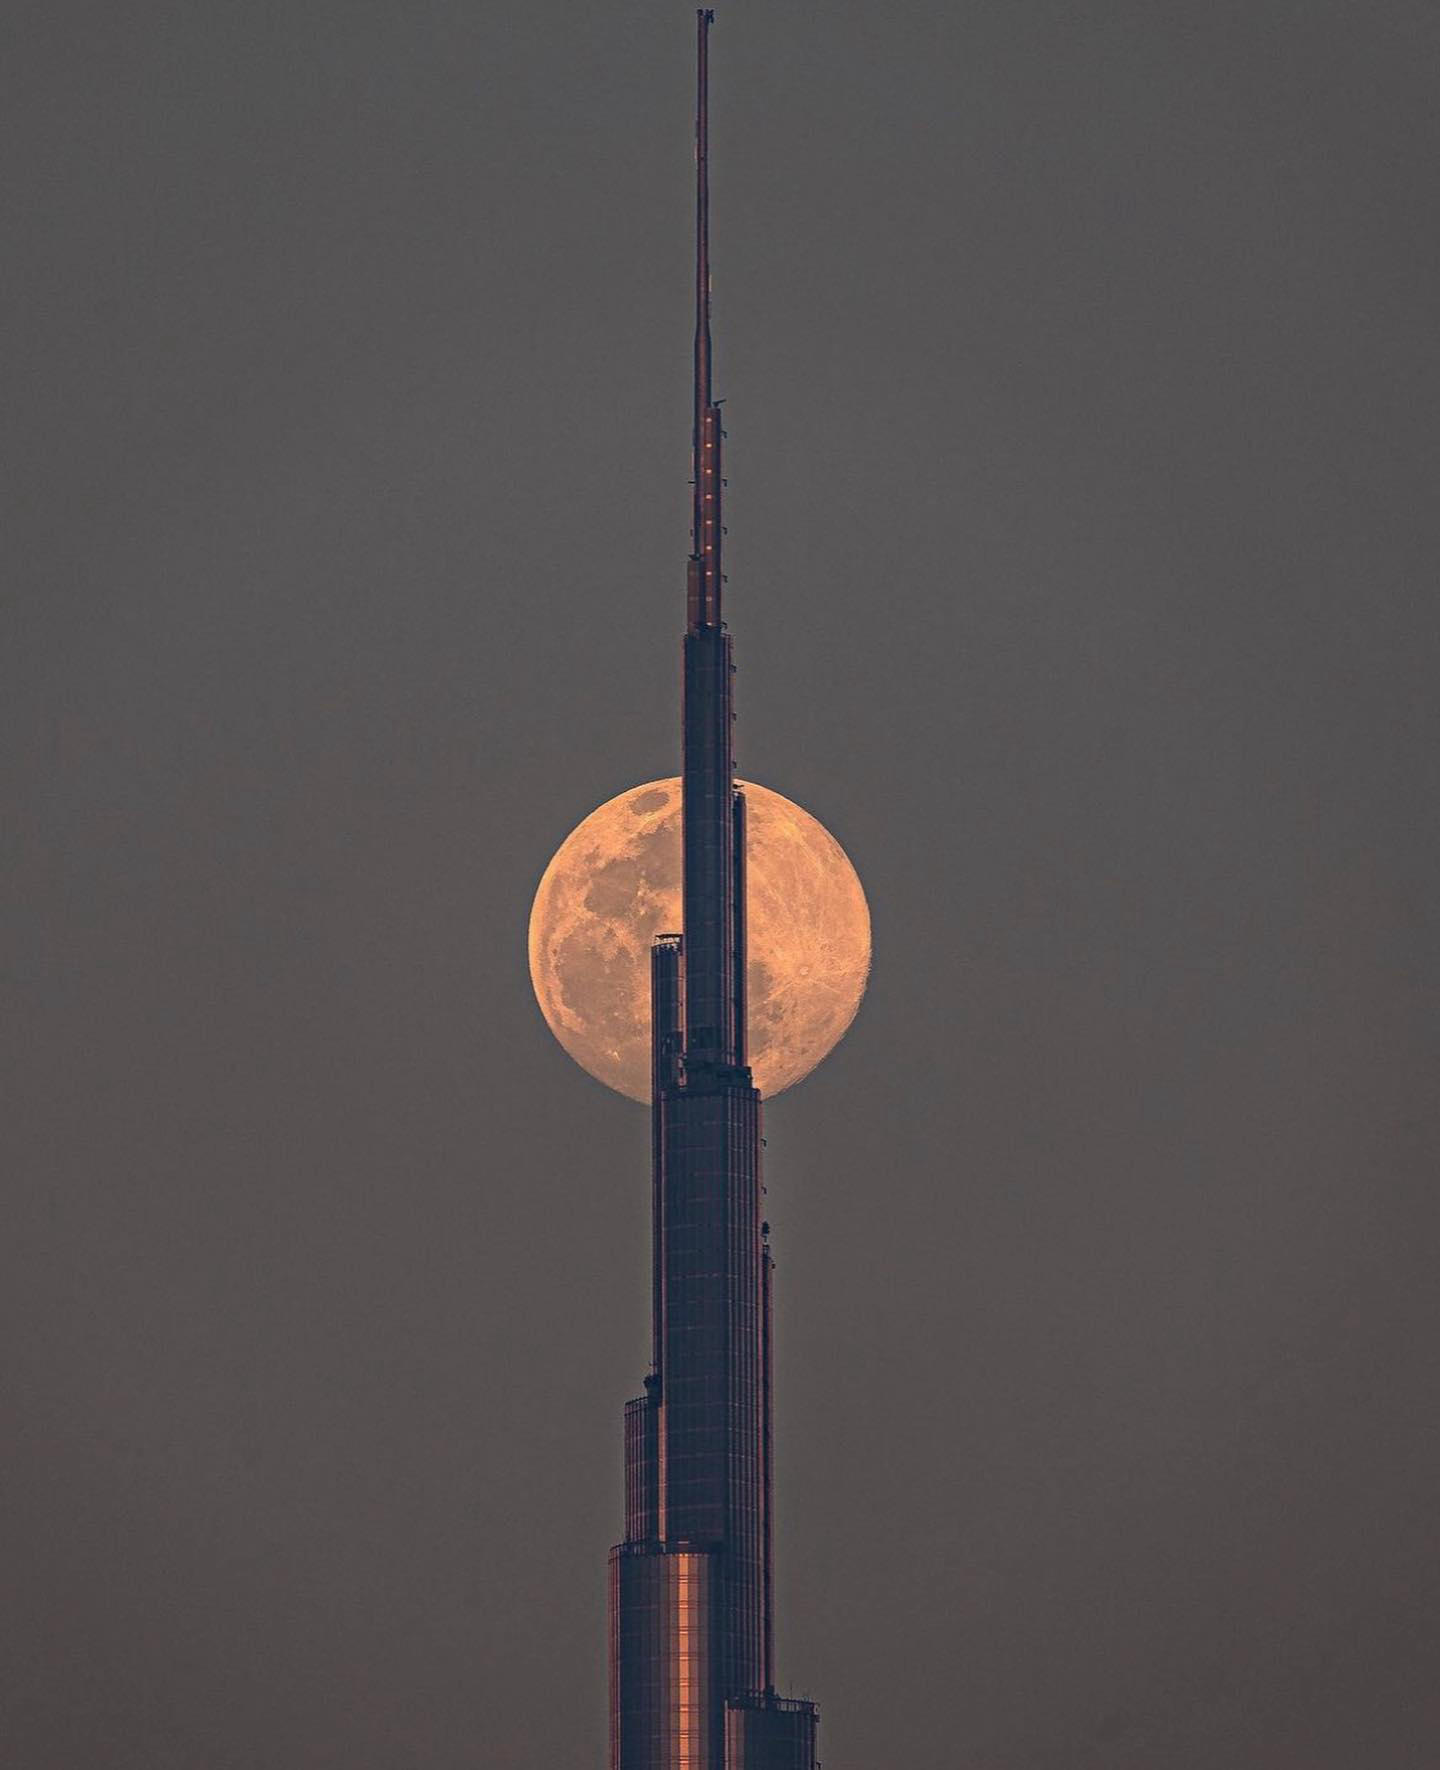 #BurjKhalifa Full Moon #Dubai